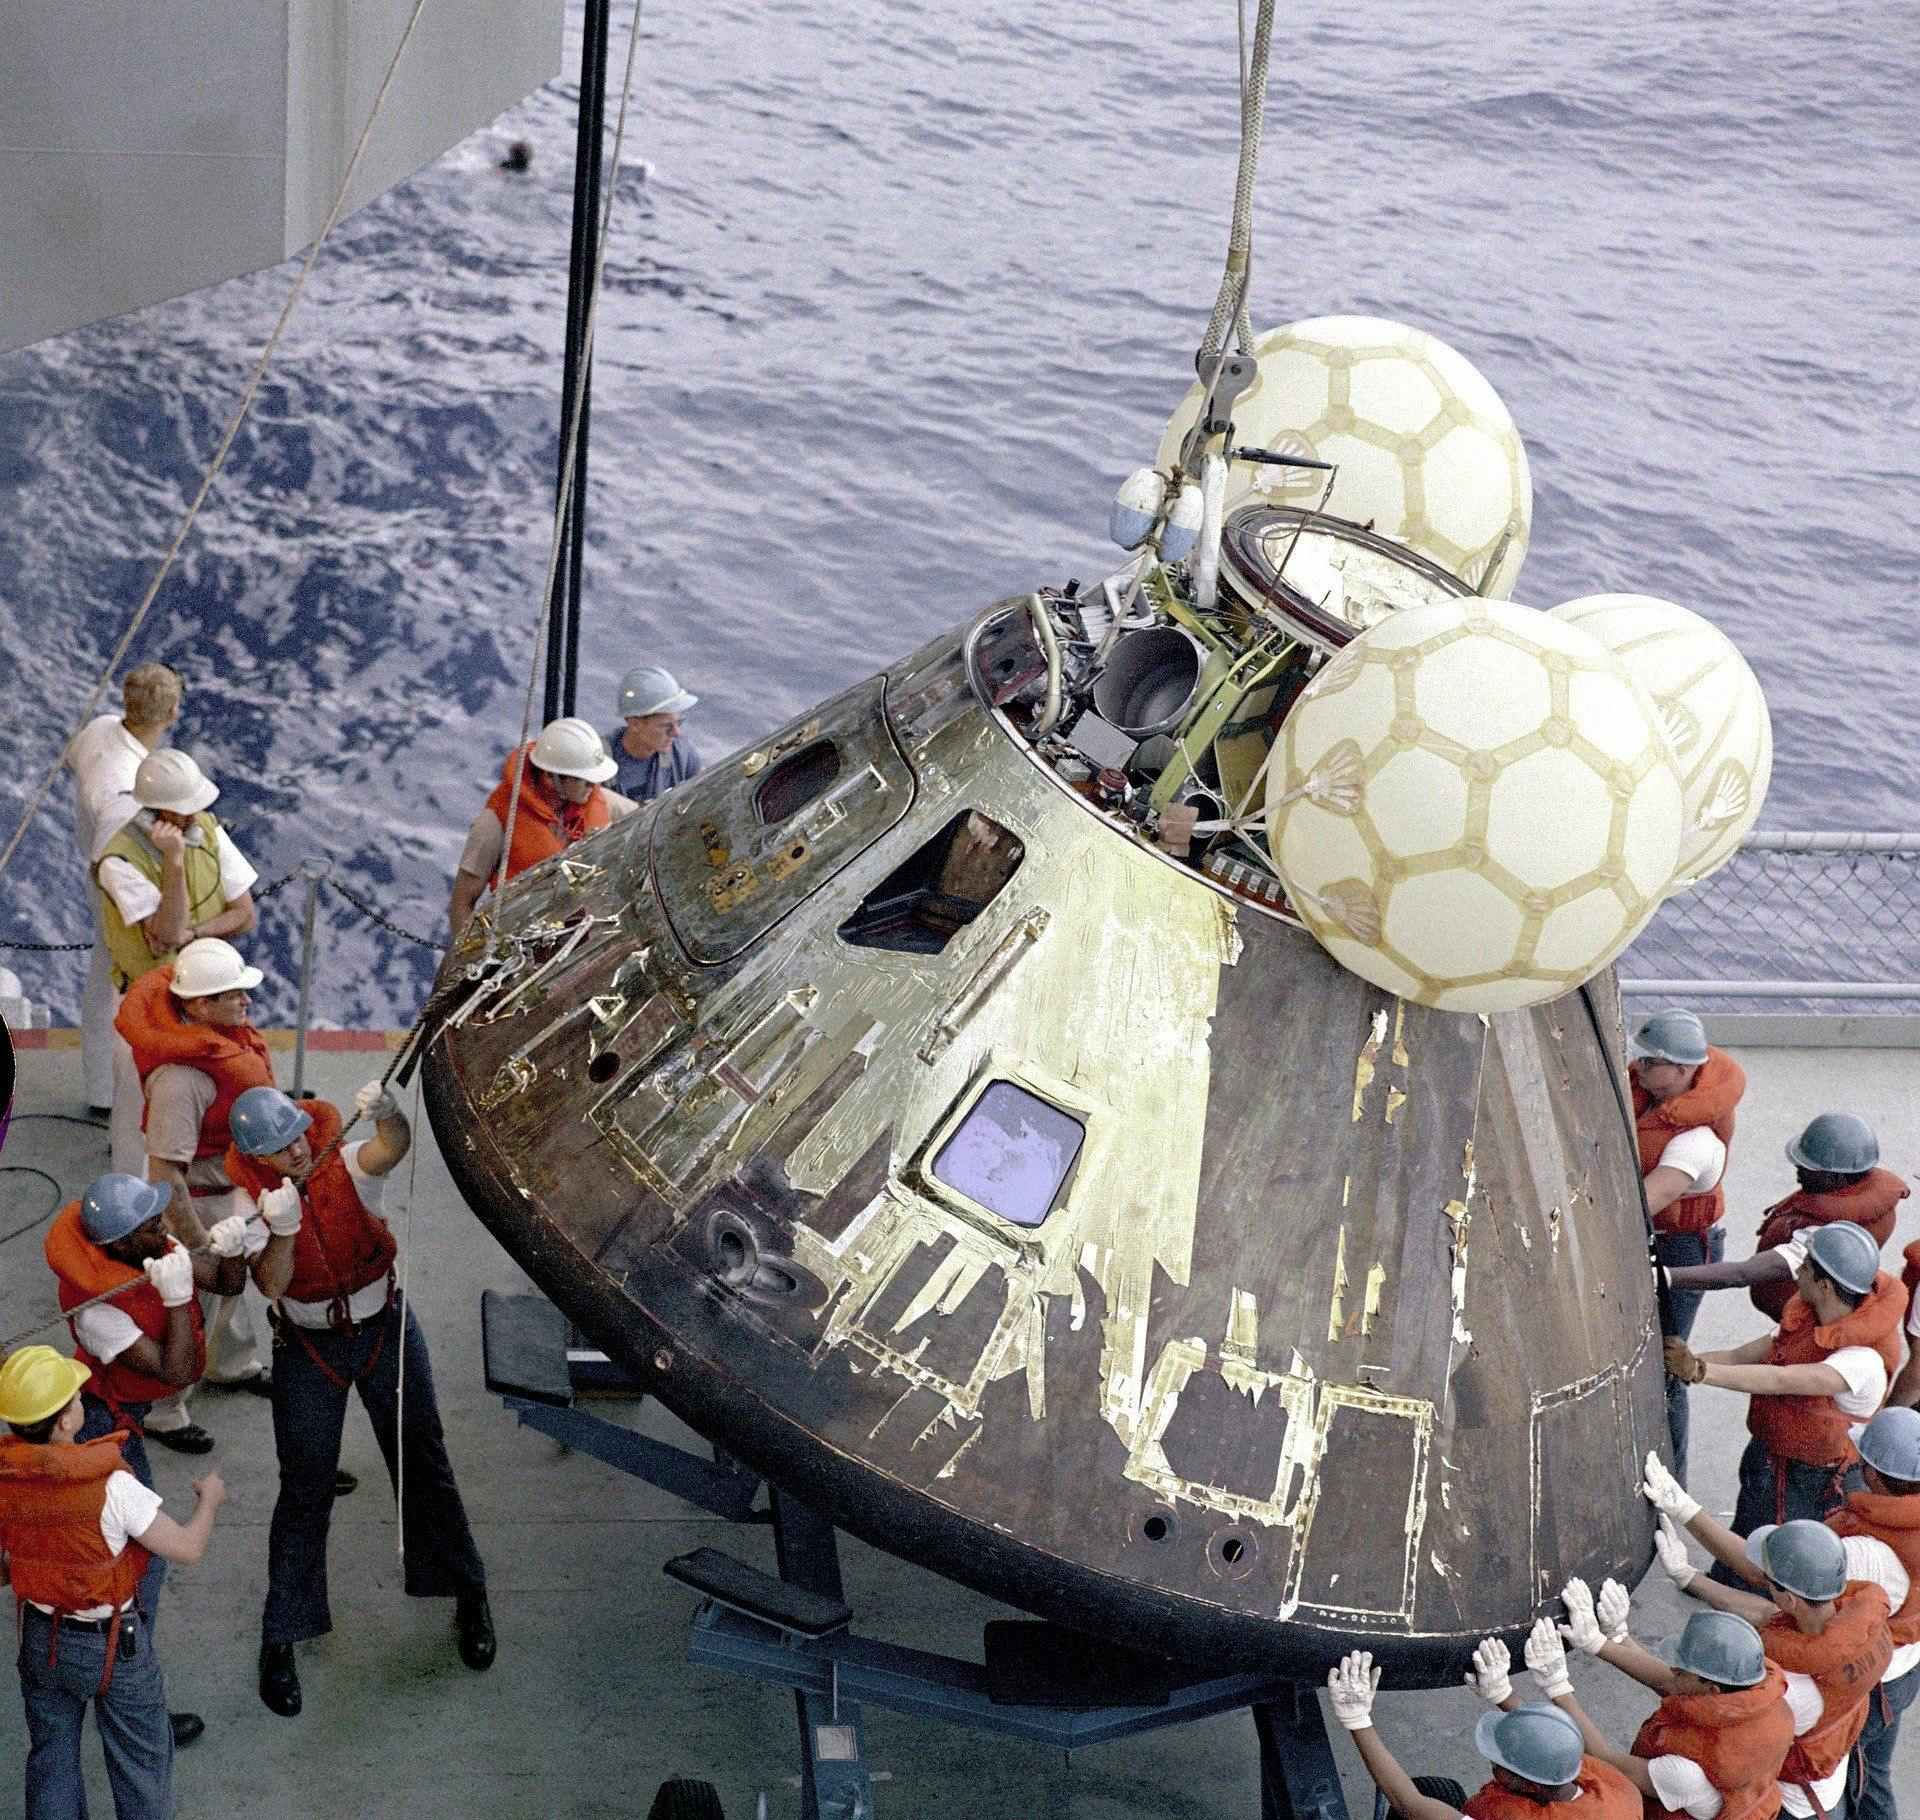 Apollo 13 landing